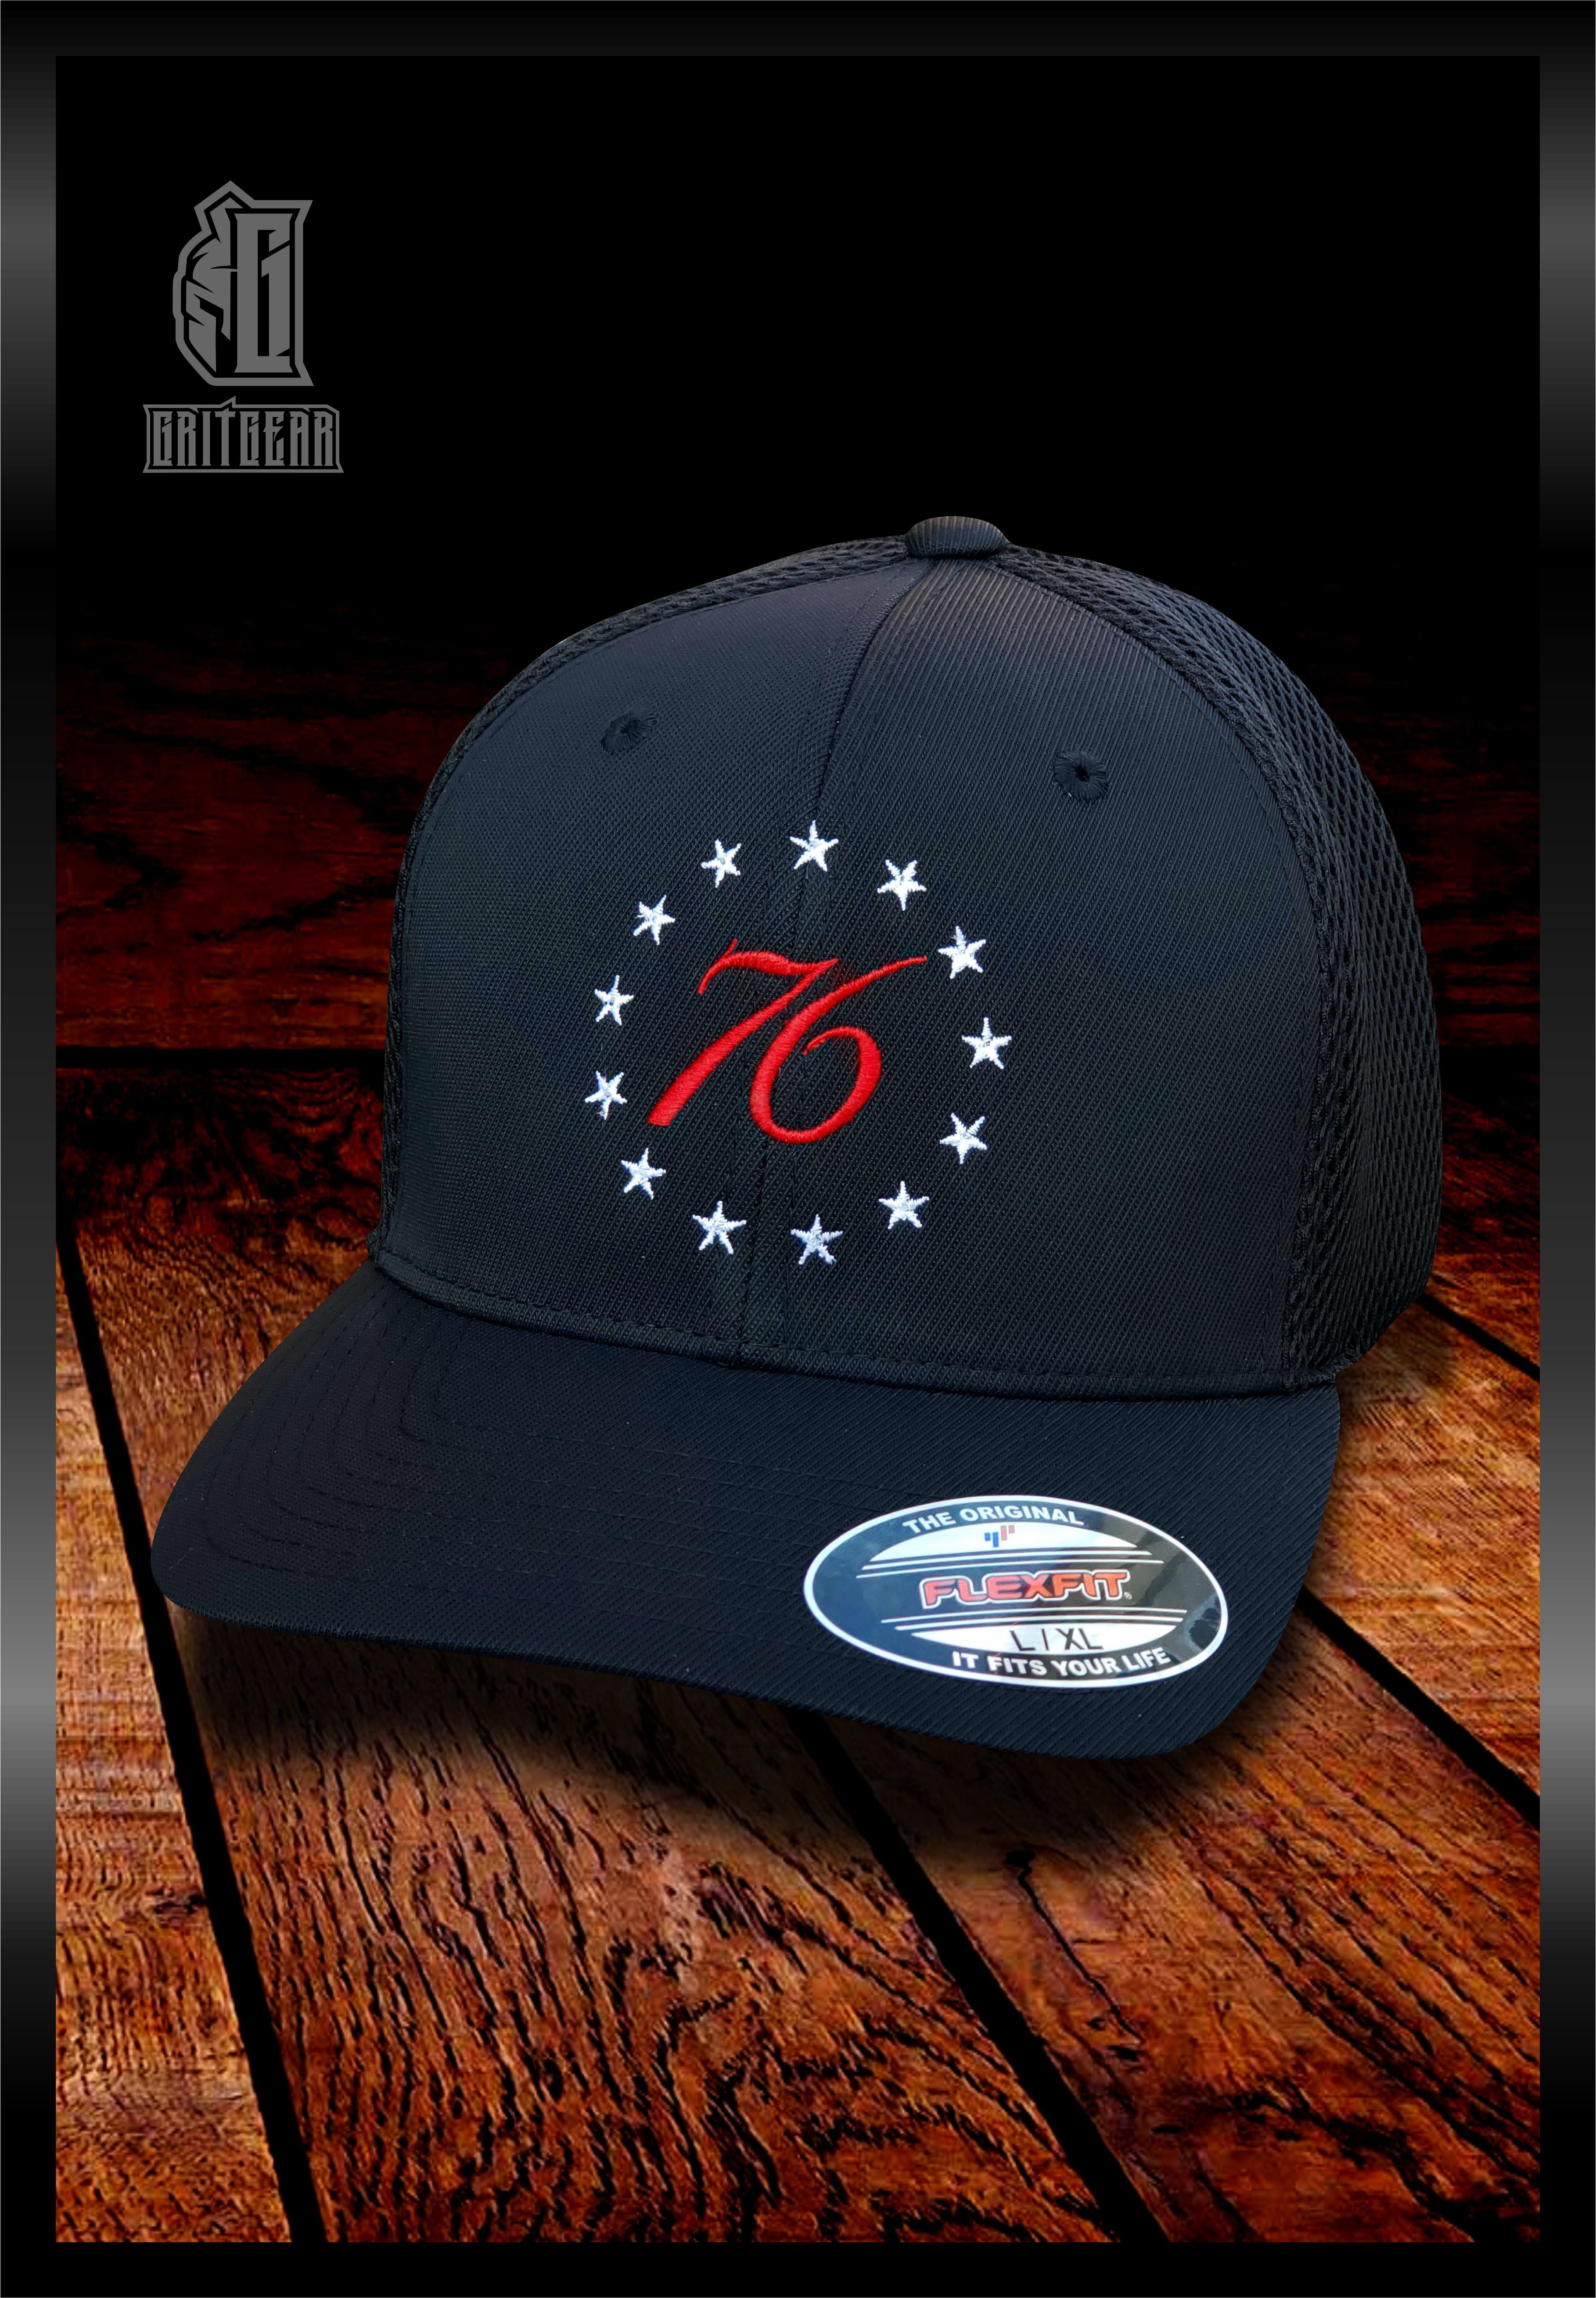 13 Star 76 Embroidered Hat | Grit Gear Apparel L-XL (7 1/8 - 7 5/8) / Black